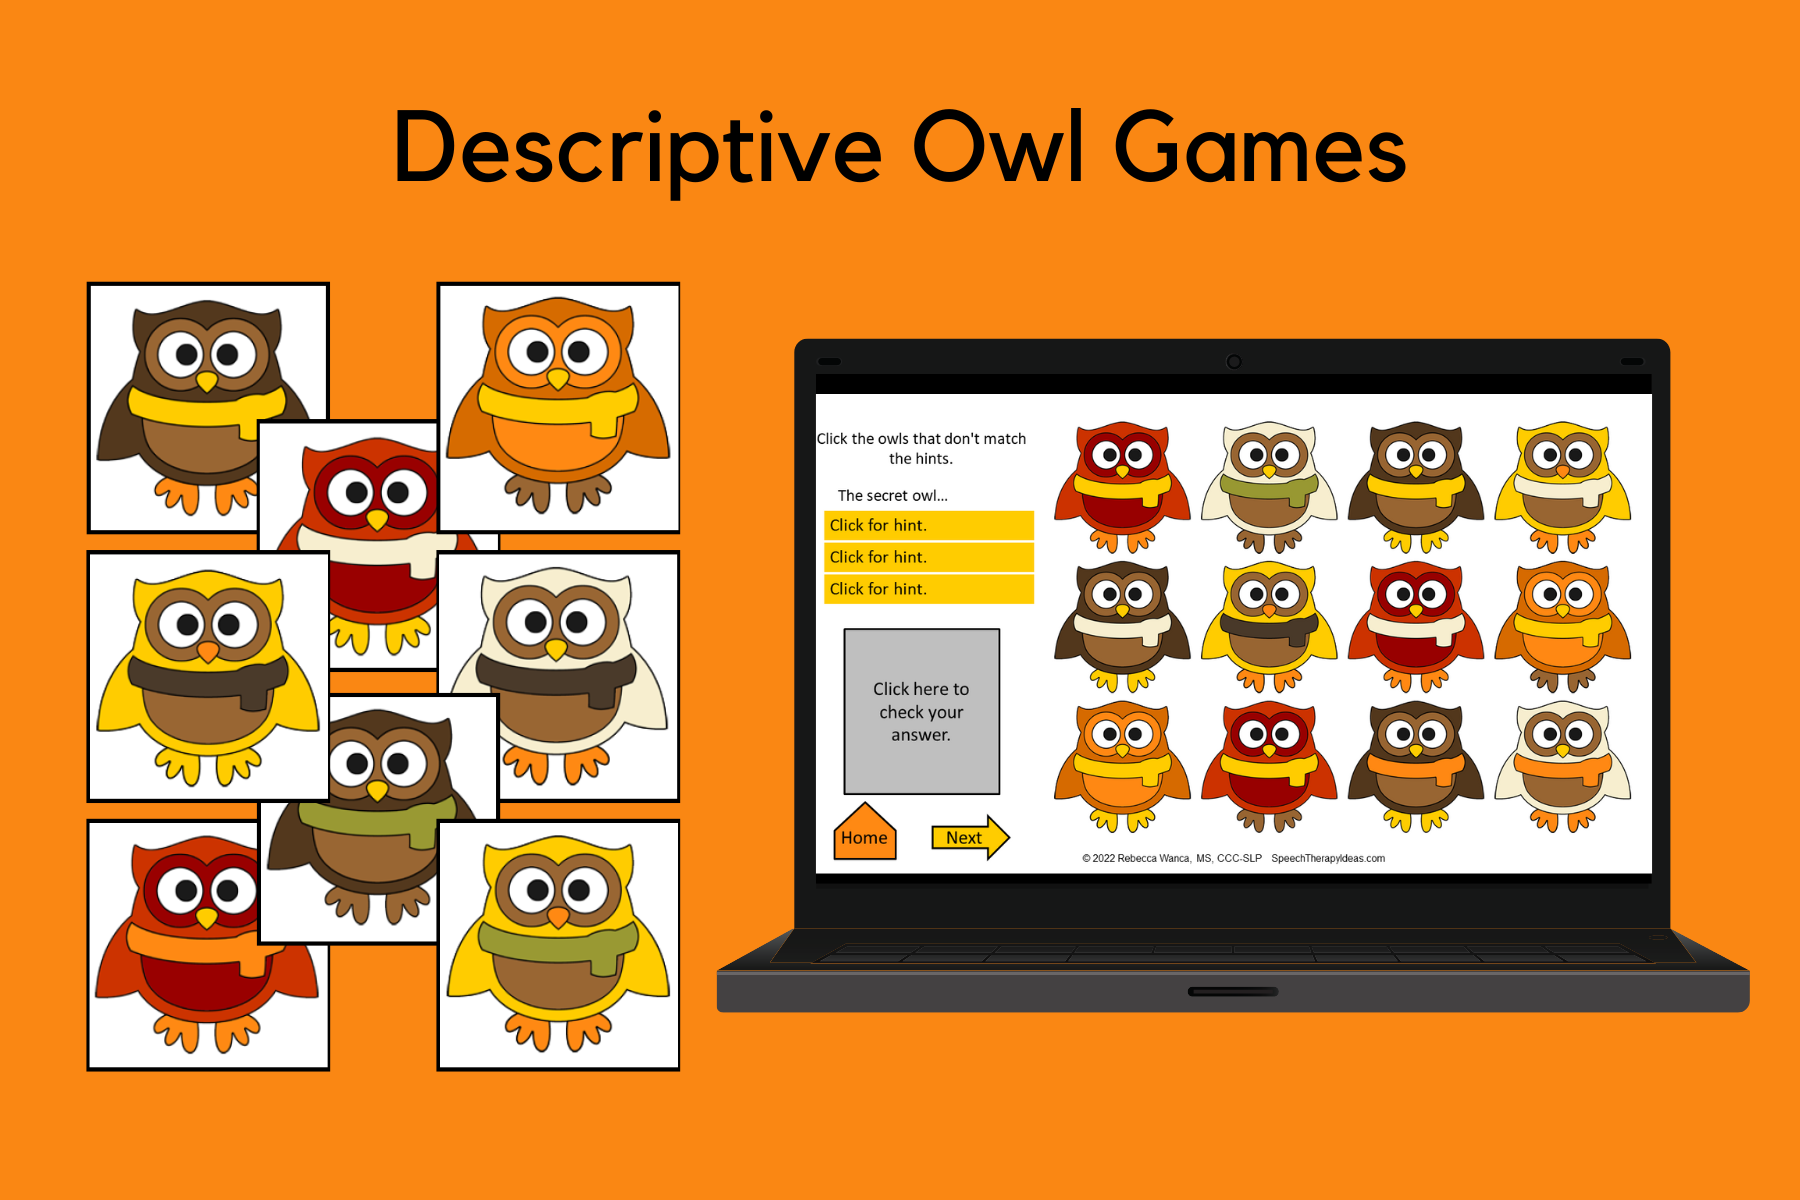 Descriptive Owl Games